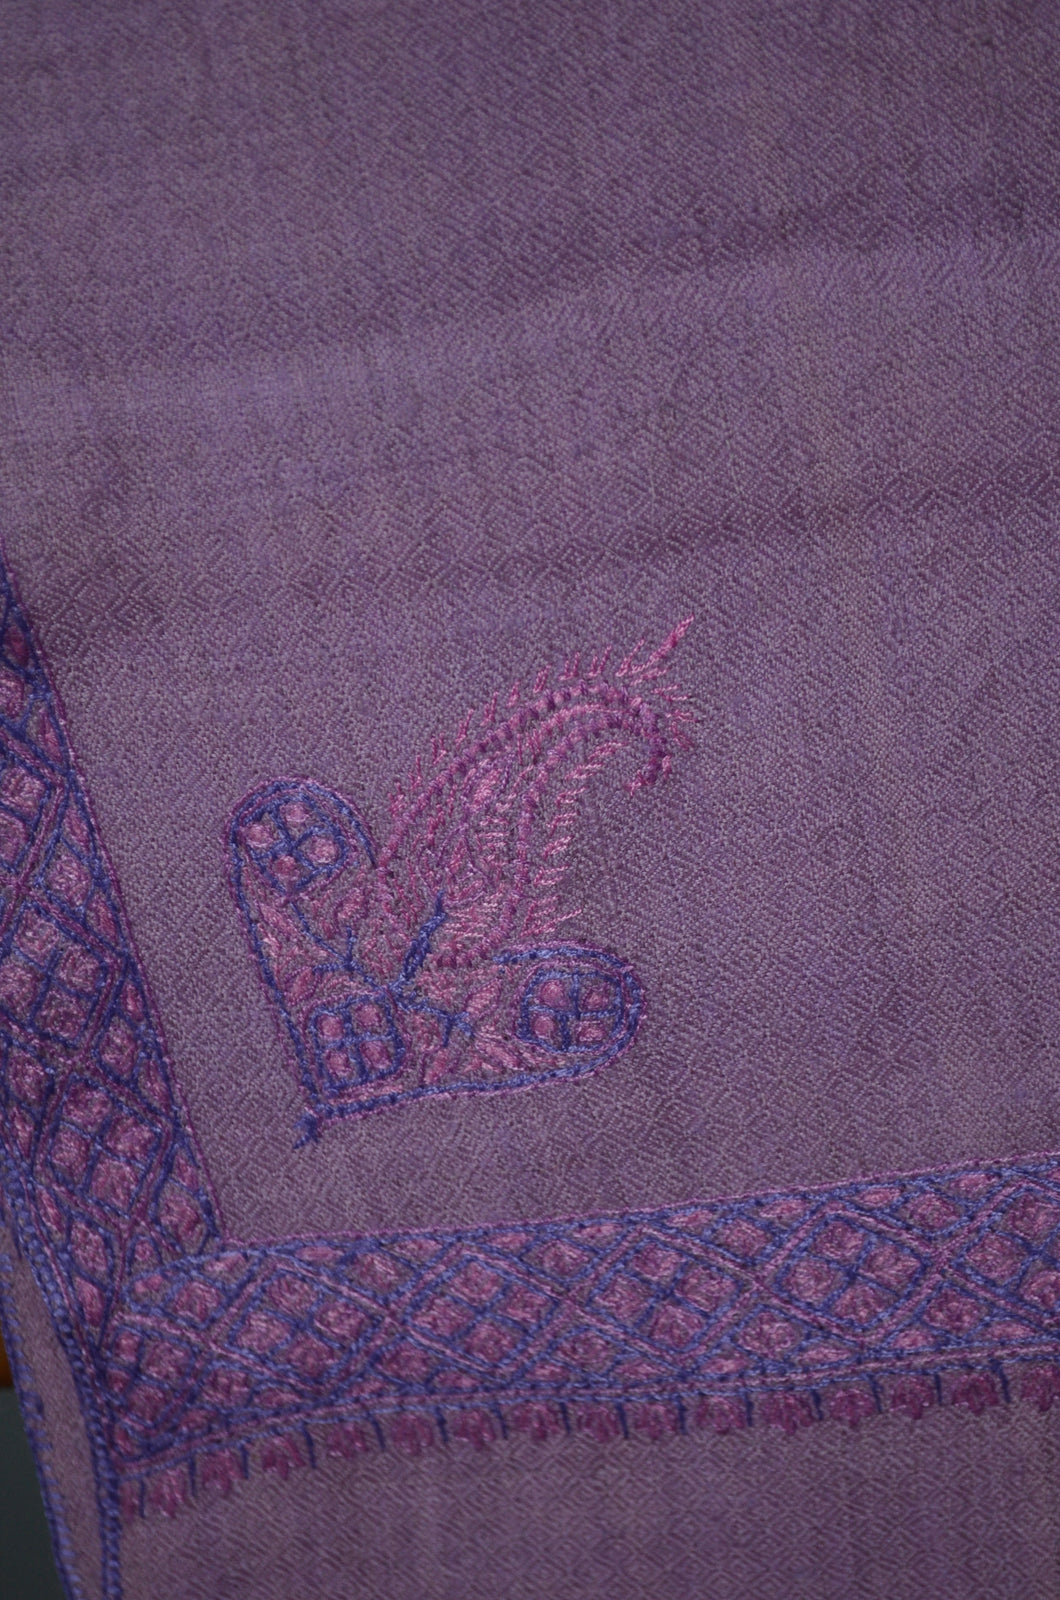 Lavender Border Embroidery Cashmere Pashmina Shawl